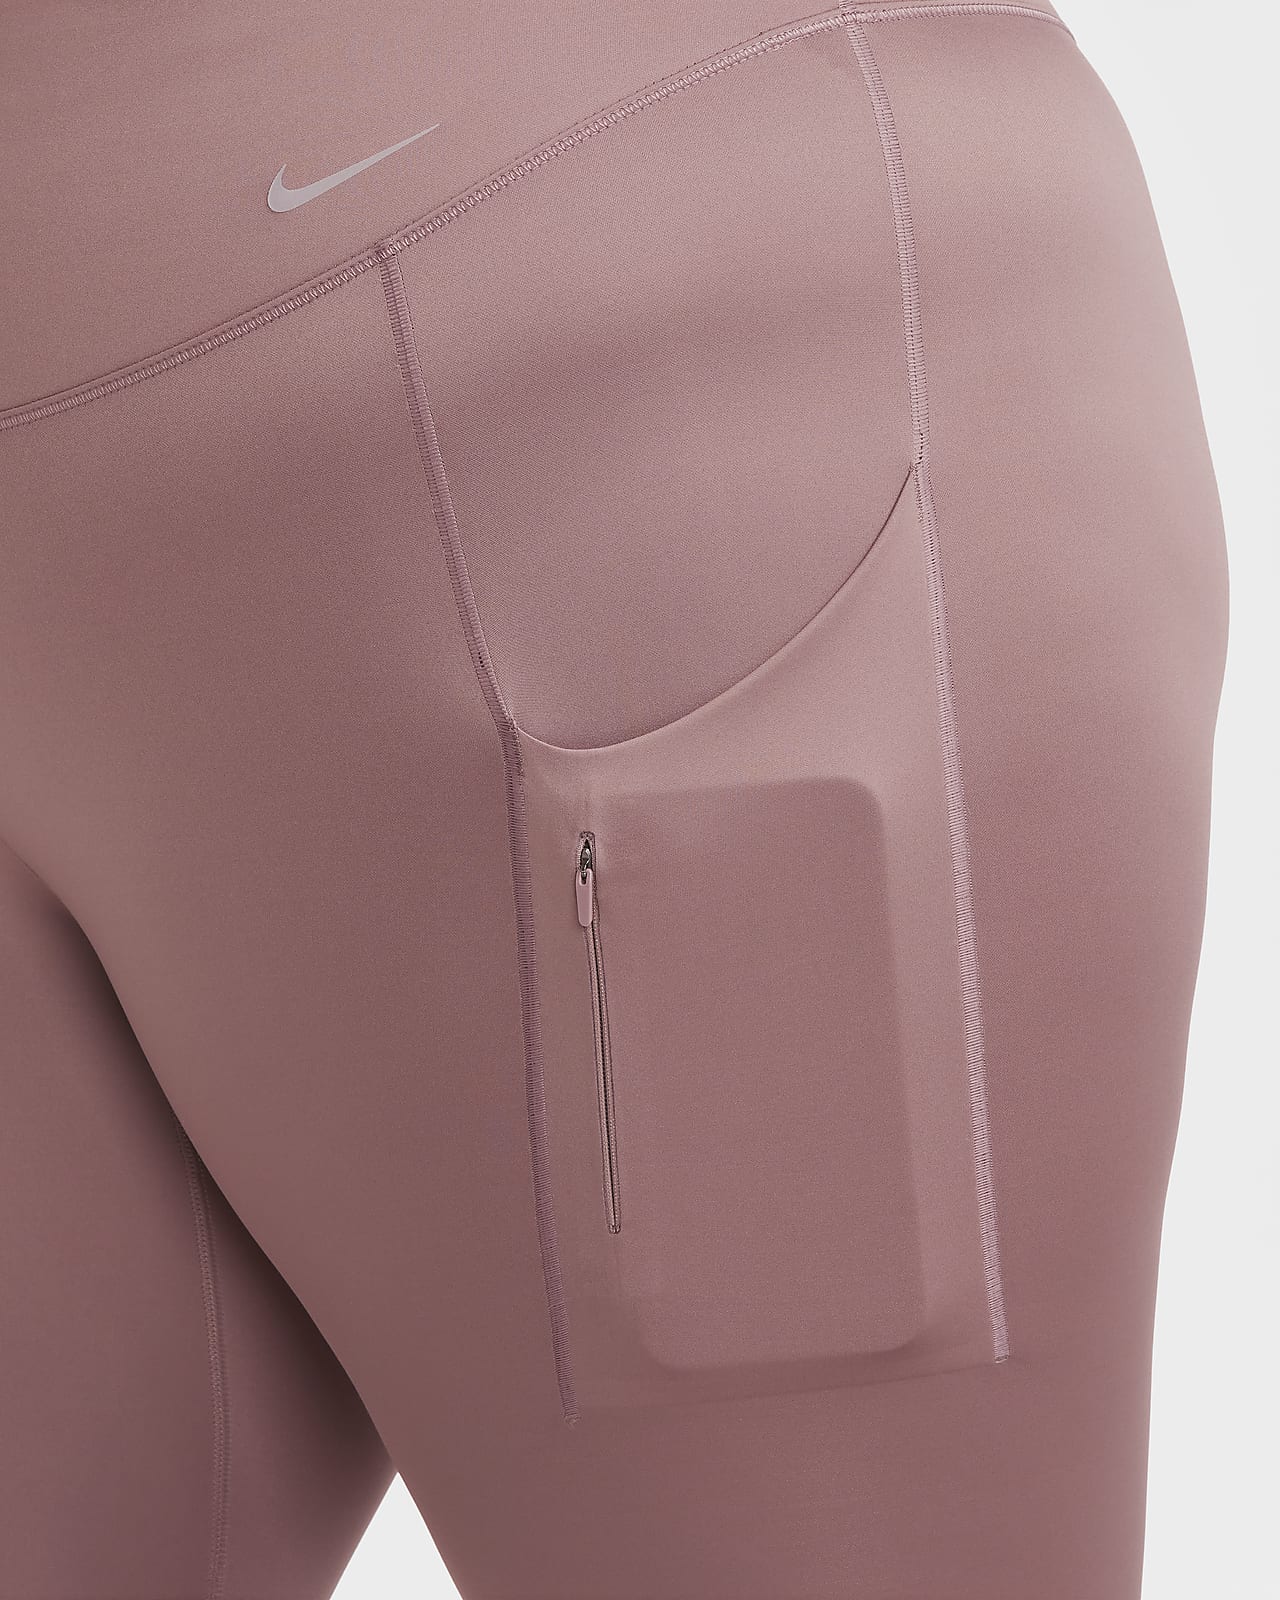 Nike Go Dri-FIT Pocket 7/8 Leggings